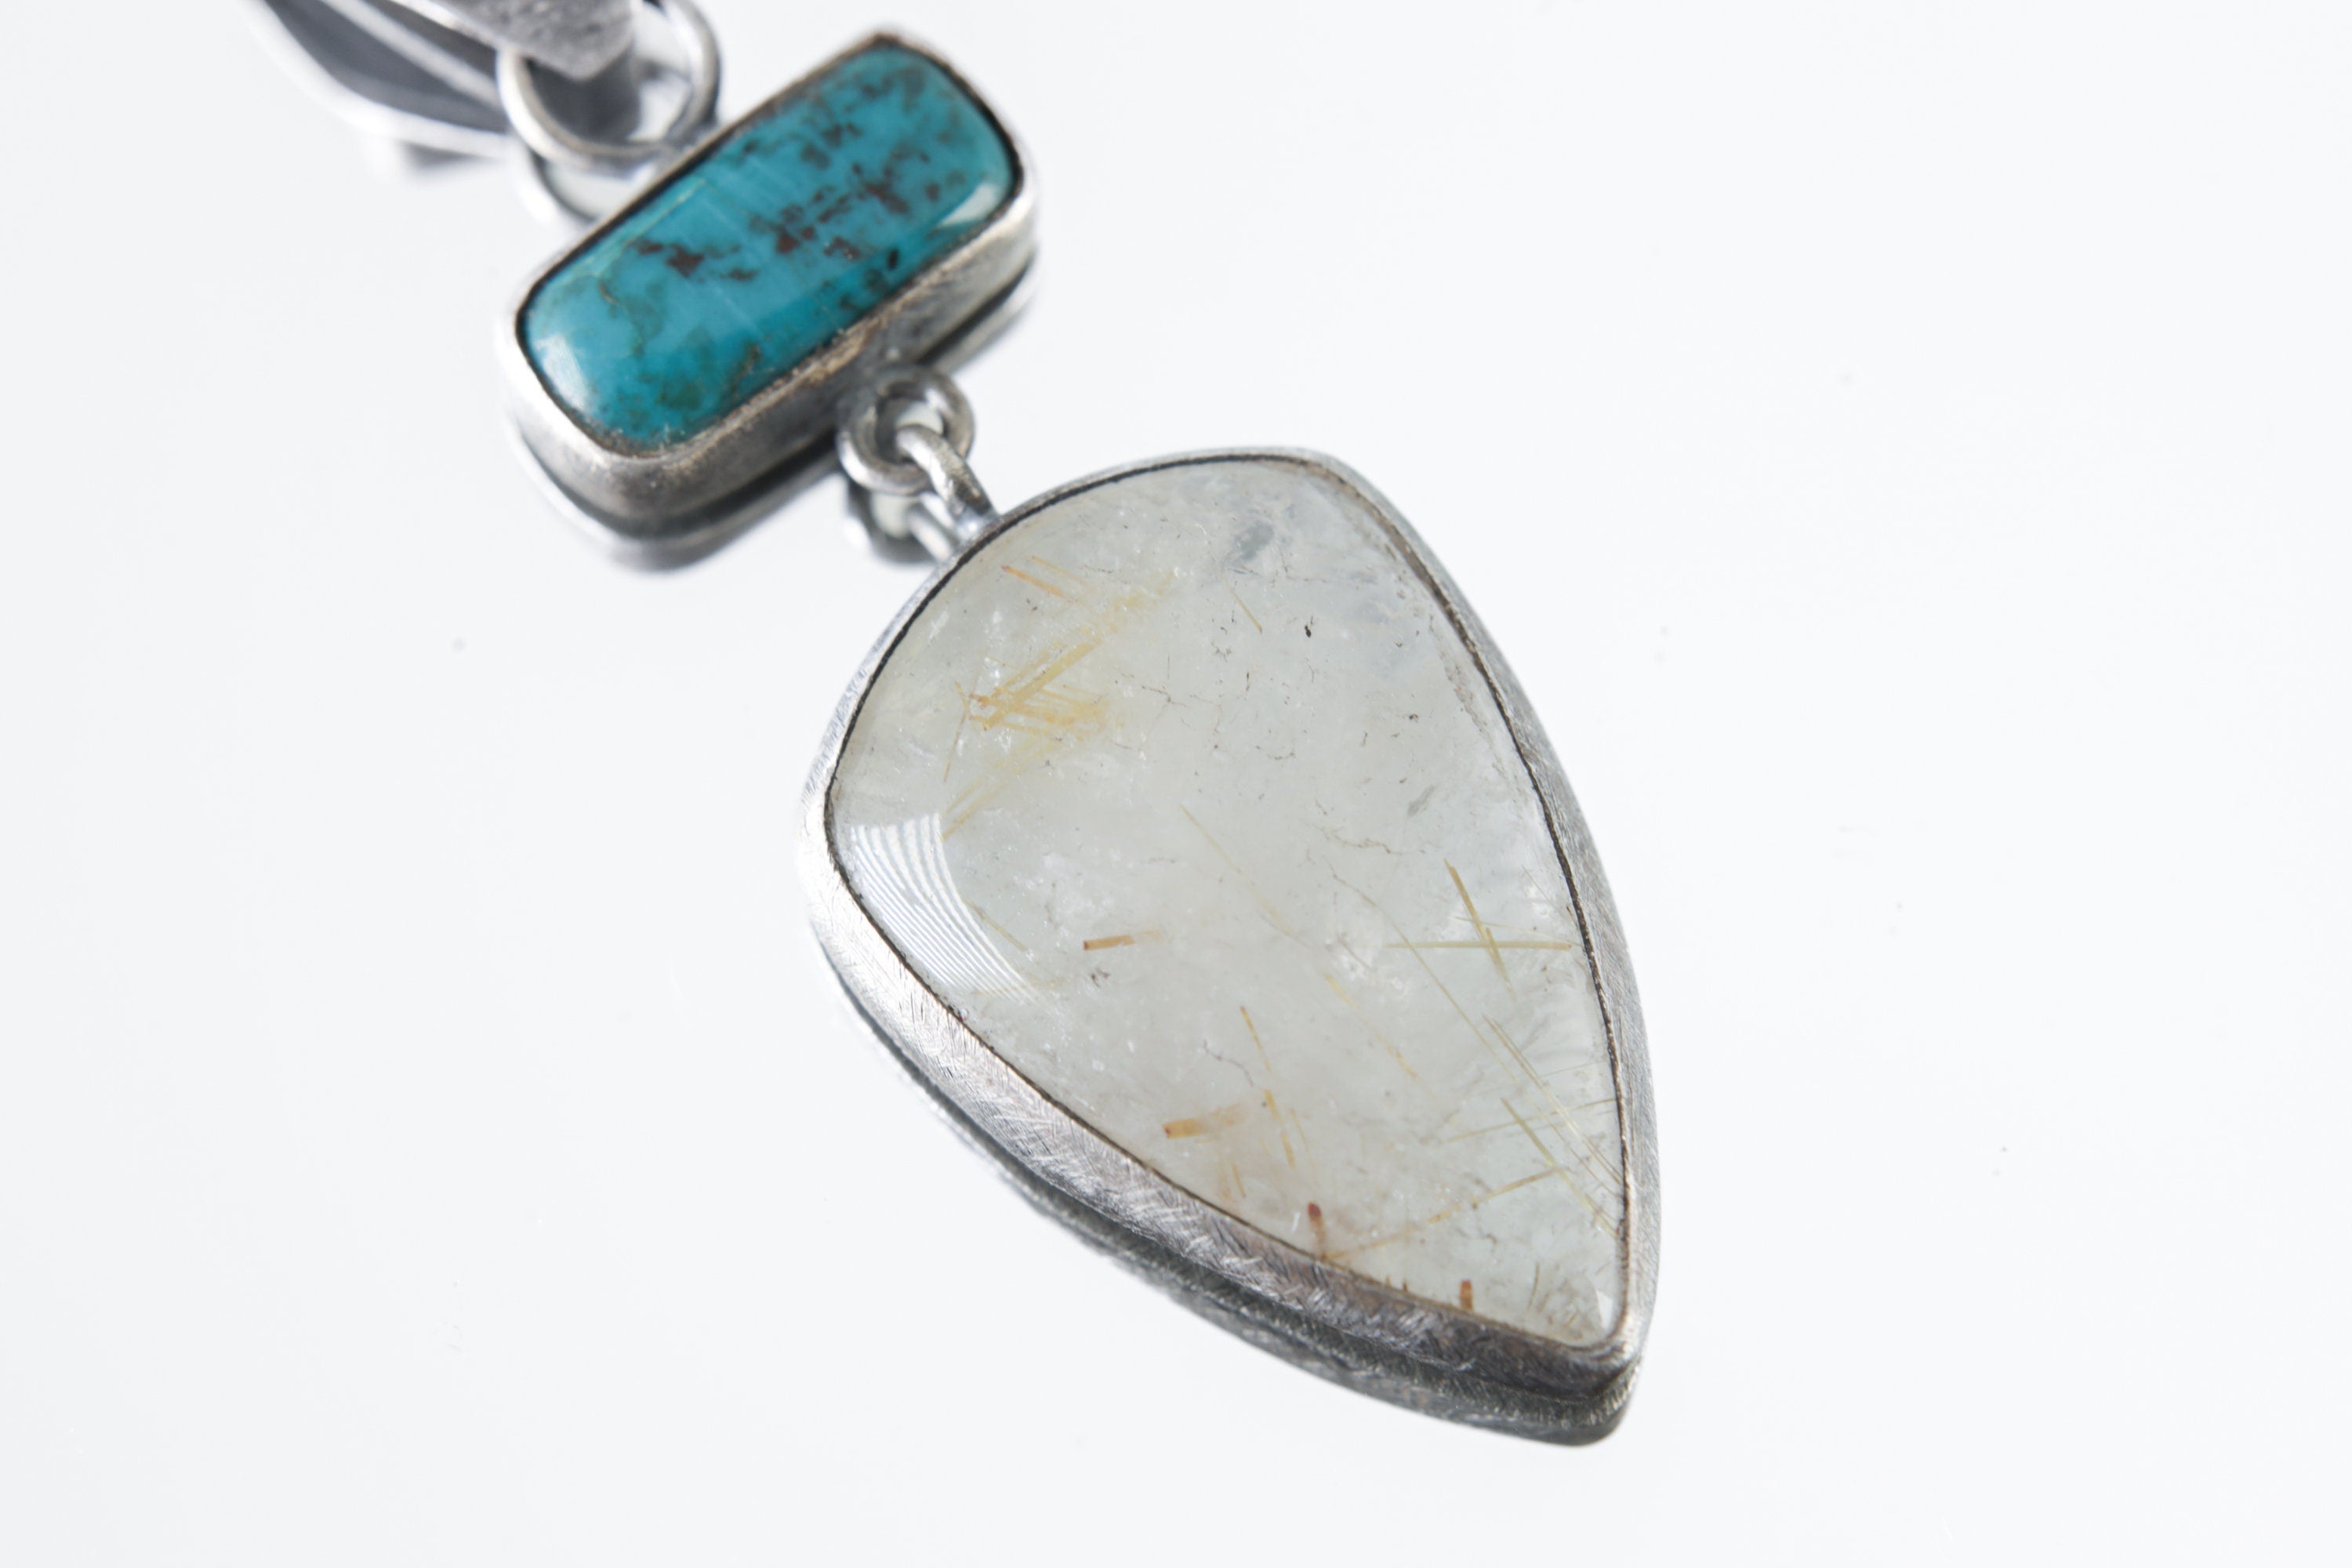 Ethereal Gaze Opal Gemstone - Sterling Silver Pendant -Oxidized Finish & Brush Textured